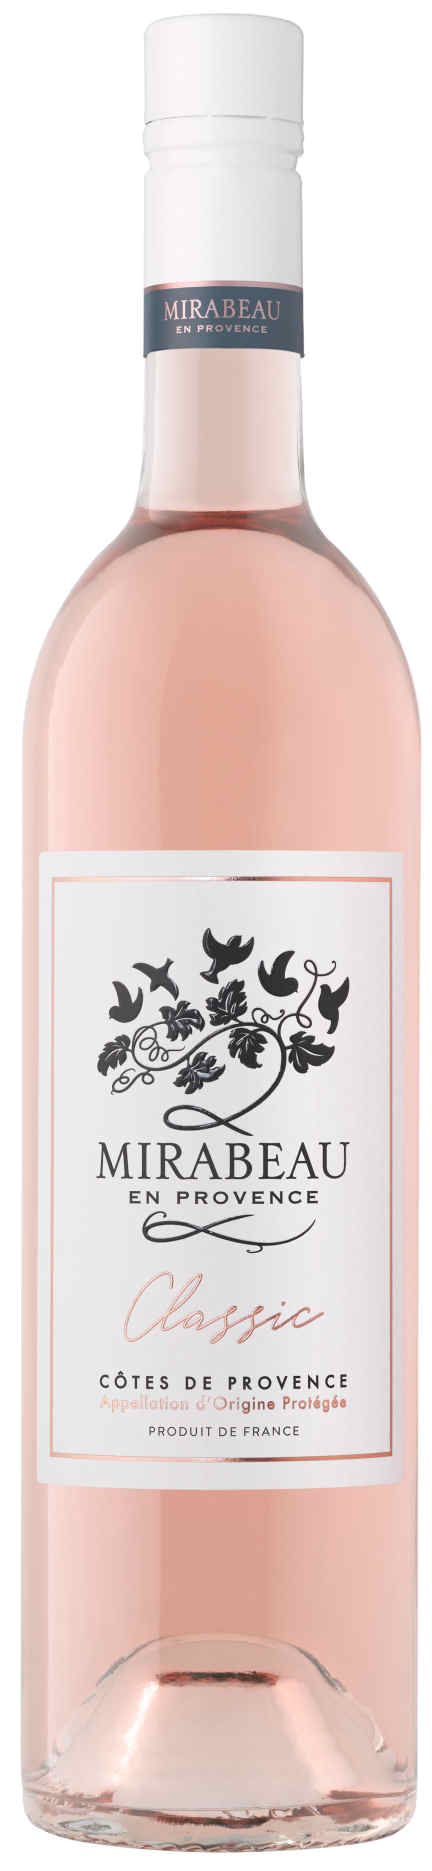 Mirabeau Classic Provence Rosé